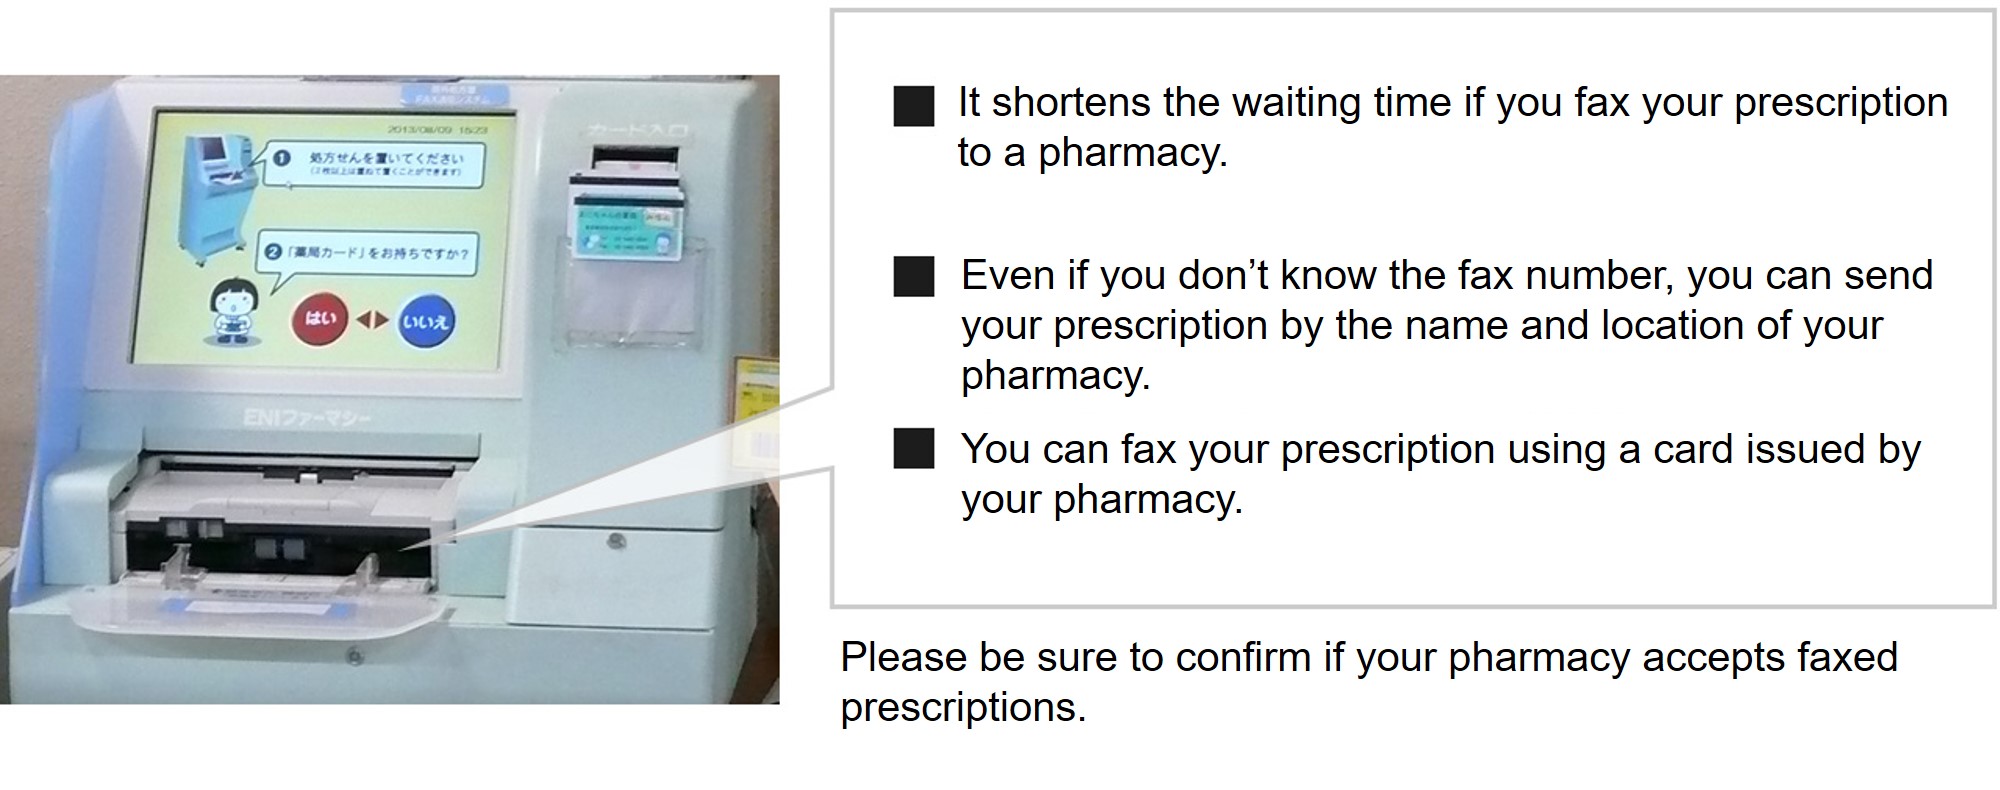 Fax corner to send a prescription to a pharmacy